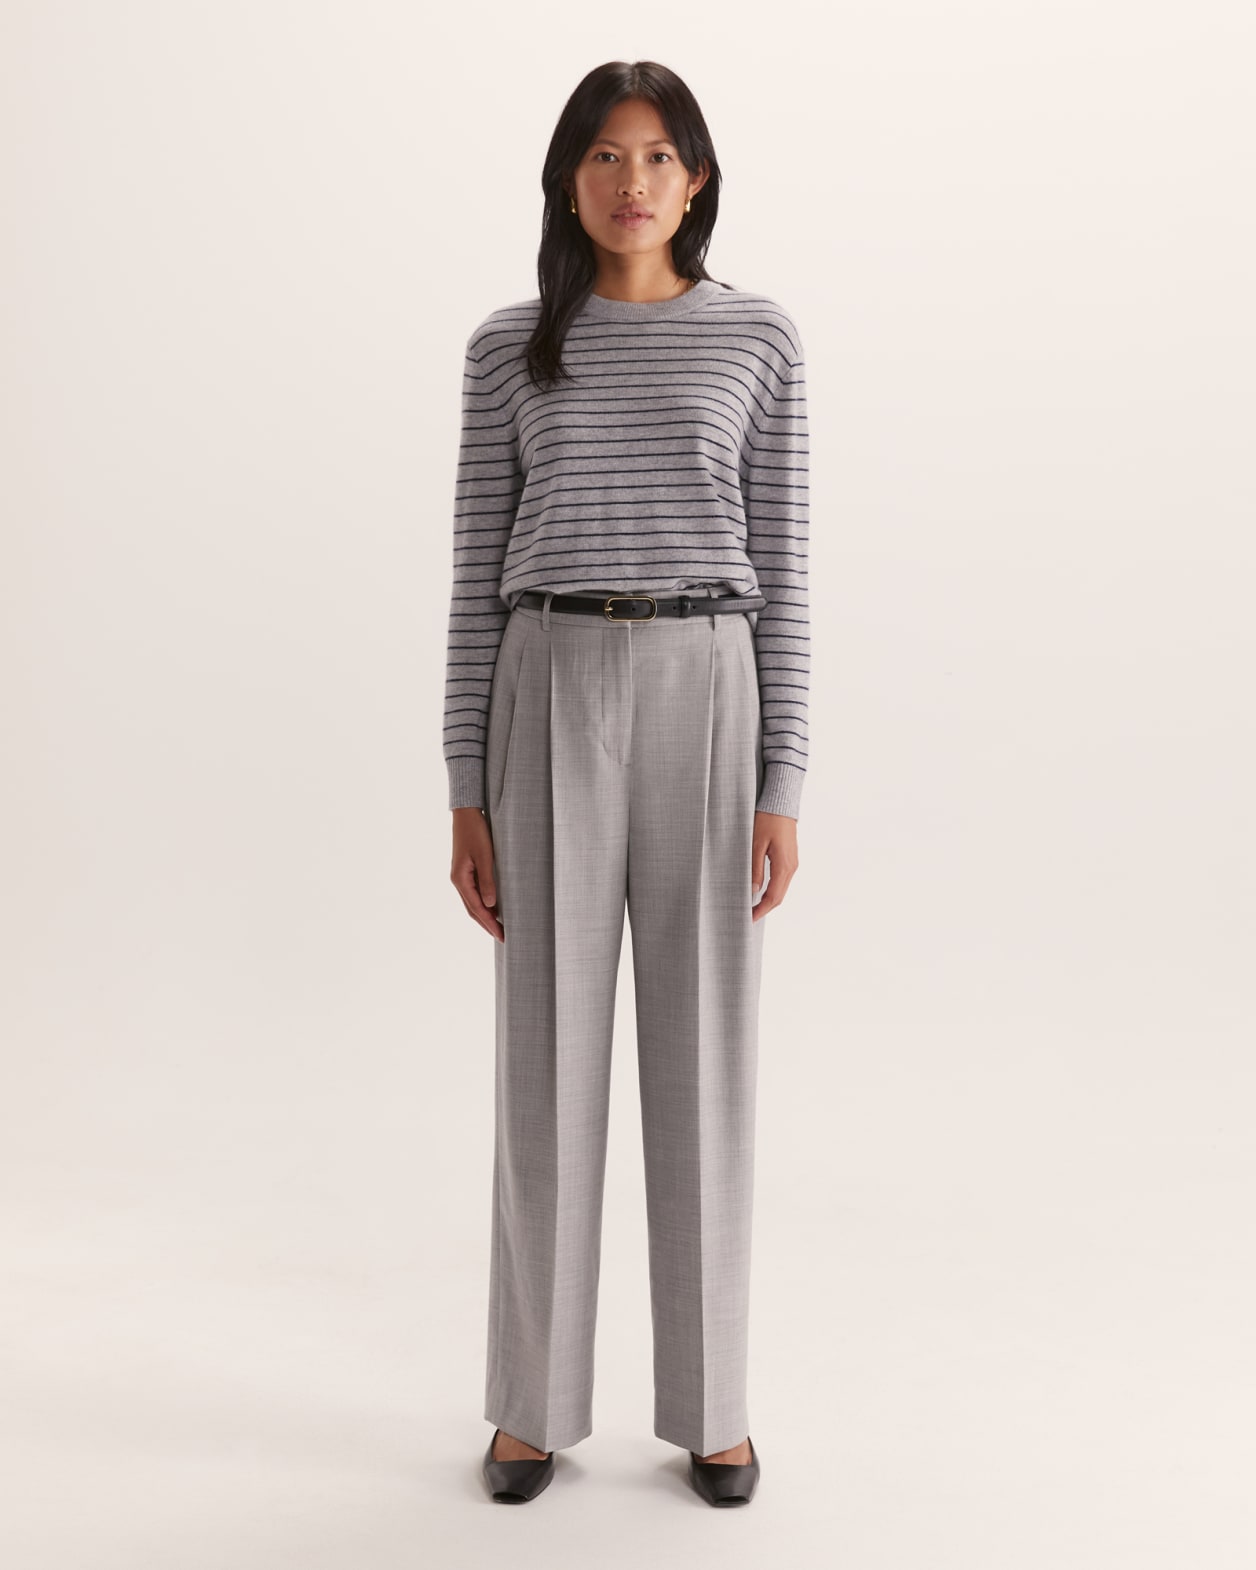 Nora Wool Cashmere Stripe Knit in GREY/NAVY